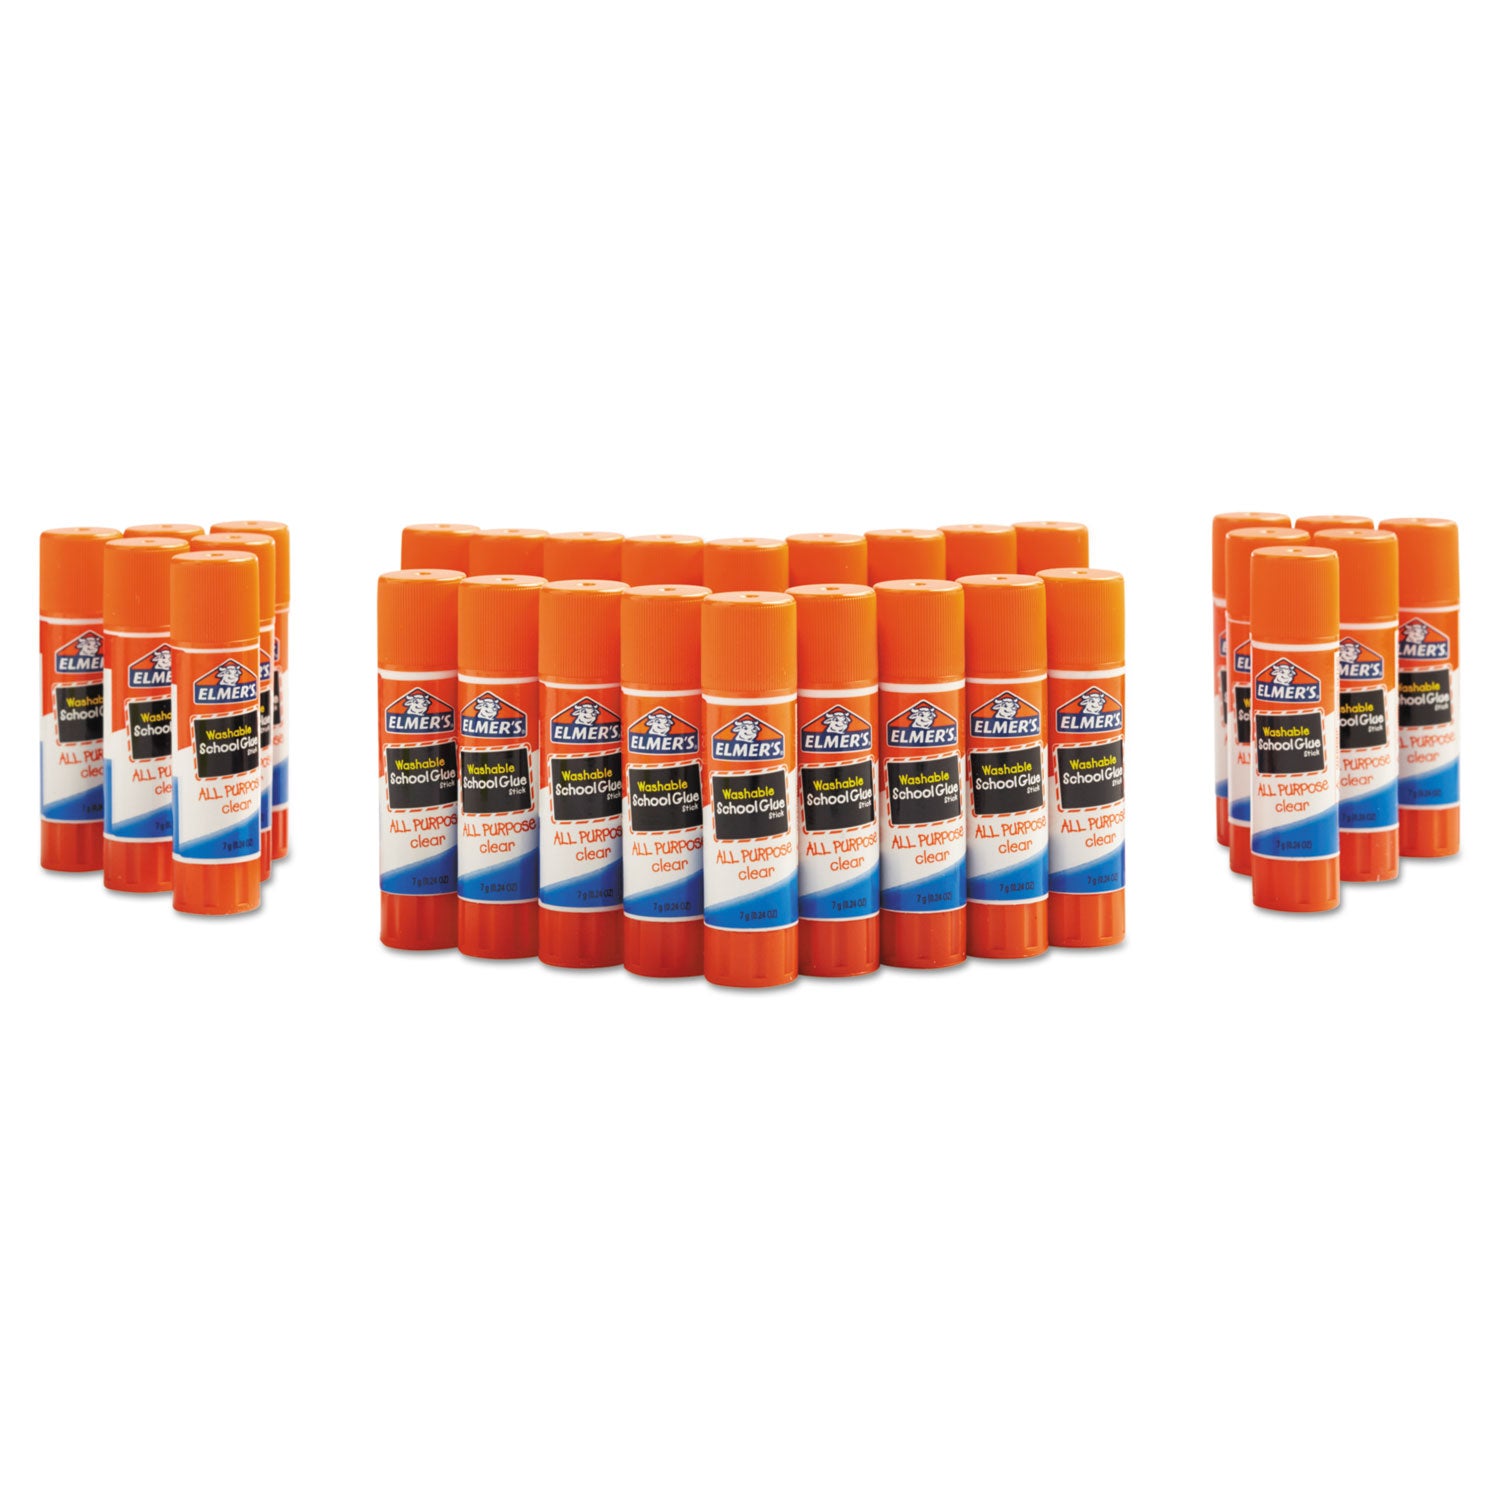 Washable School Glue Sticks, 0.24 oz, Applies and Dries Clear, 30/Box - 